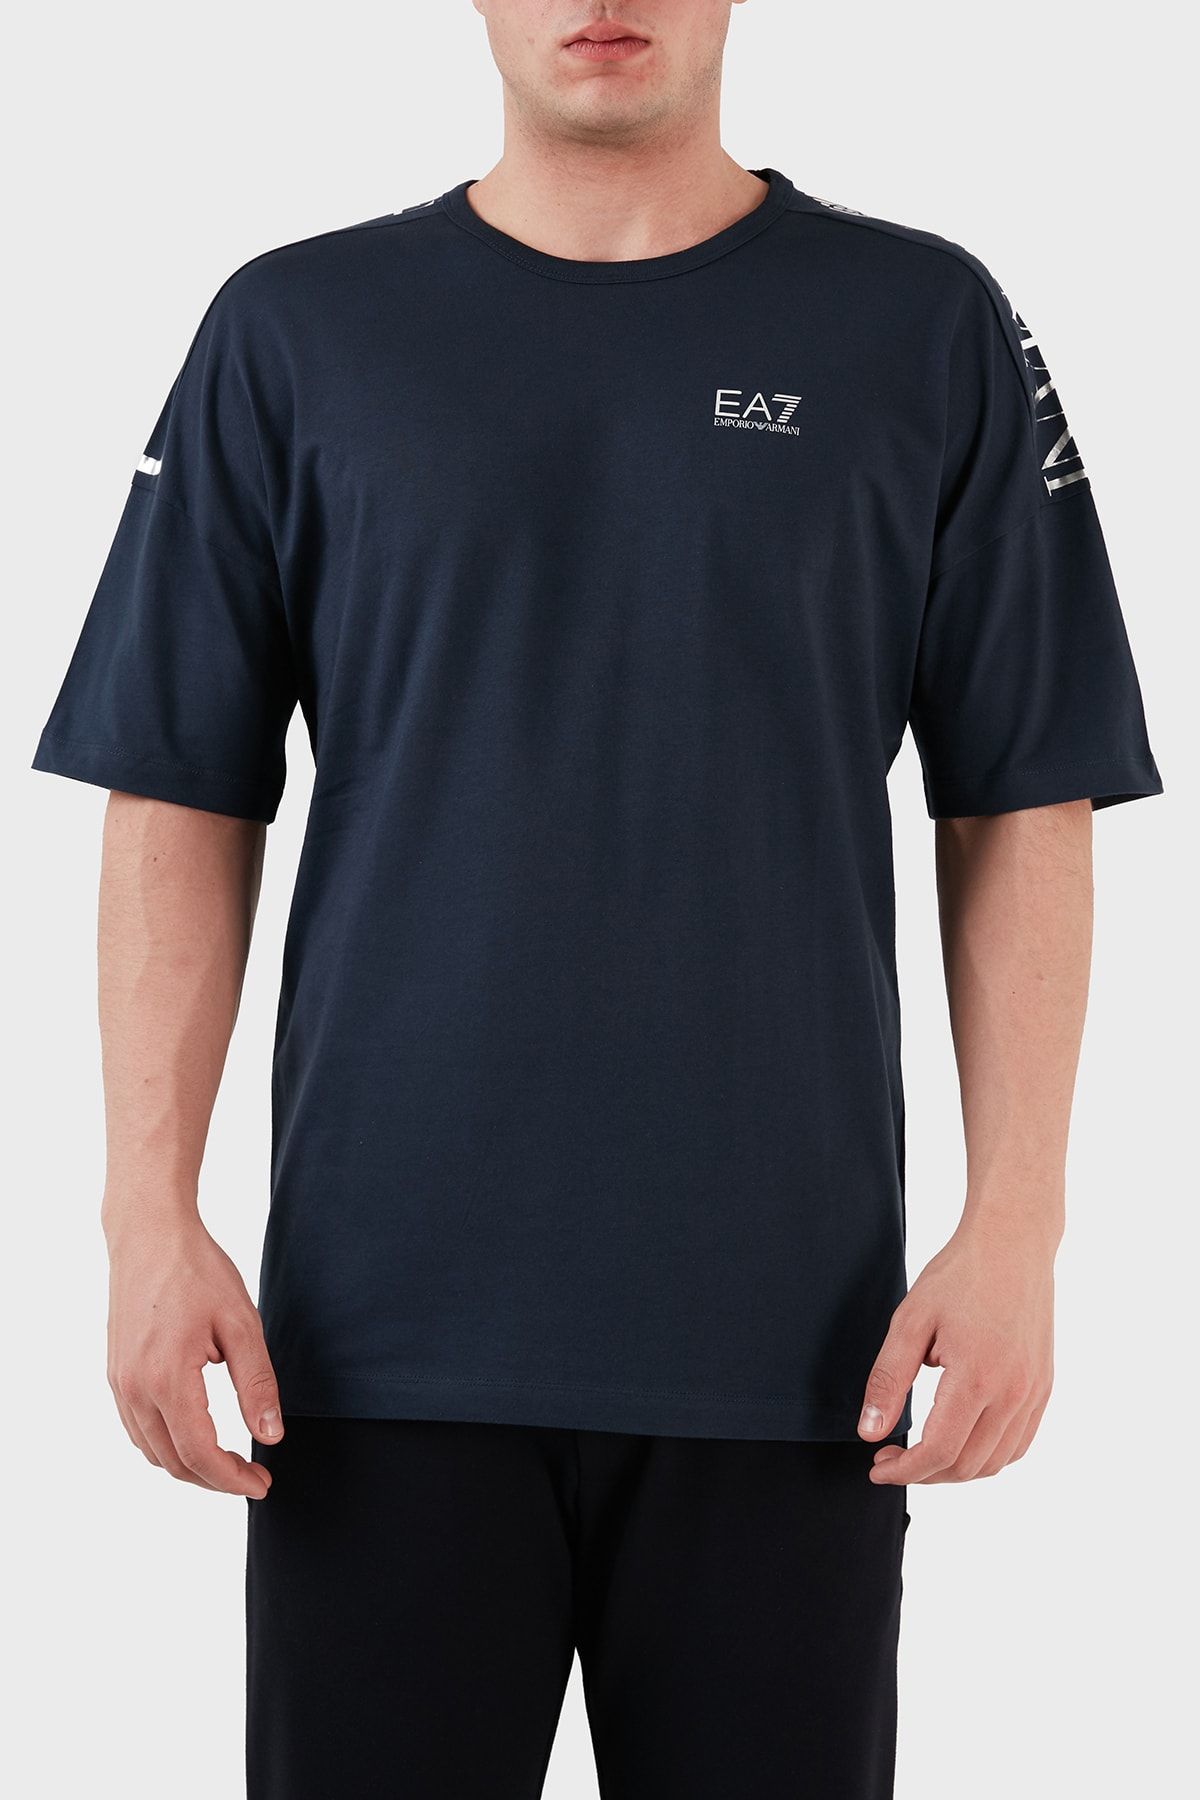 EA7 Logolu % 100 Pamuk Bisiklet Yaka Regular Fit T Shirt Erkek T Shirt 6lpt23 Pj7cz 1554